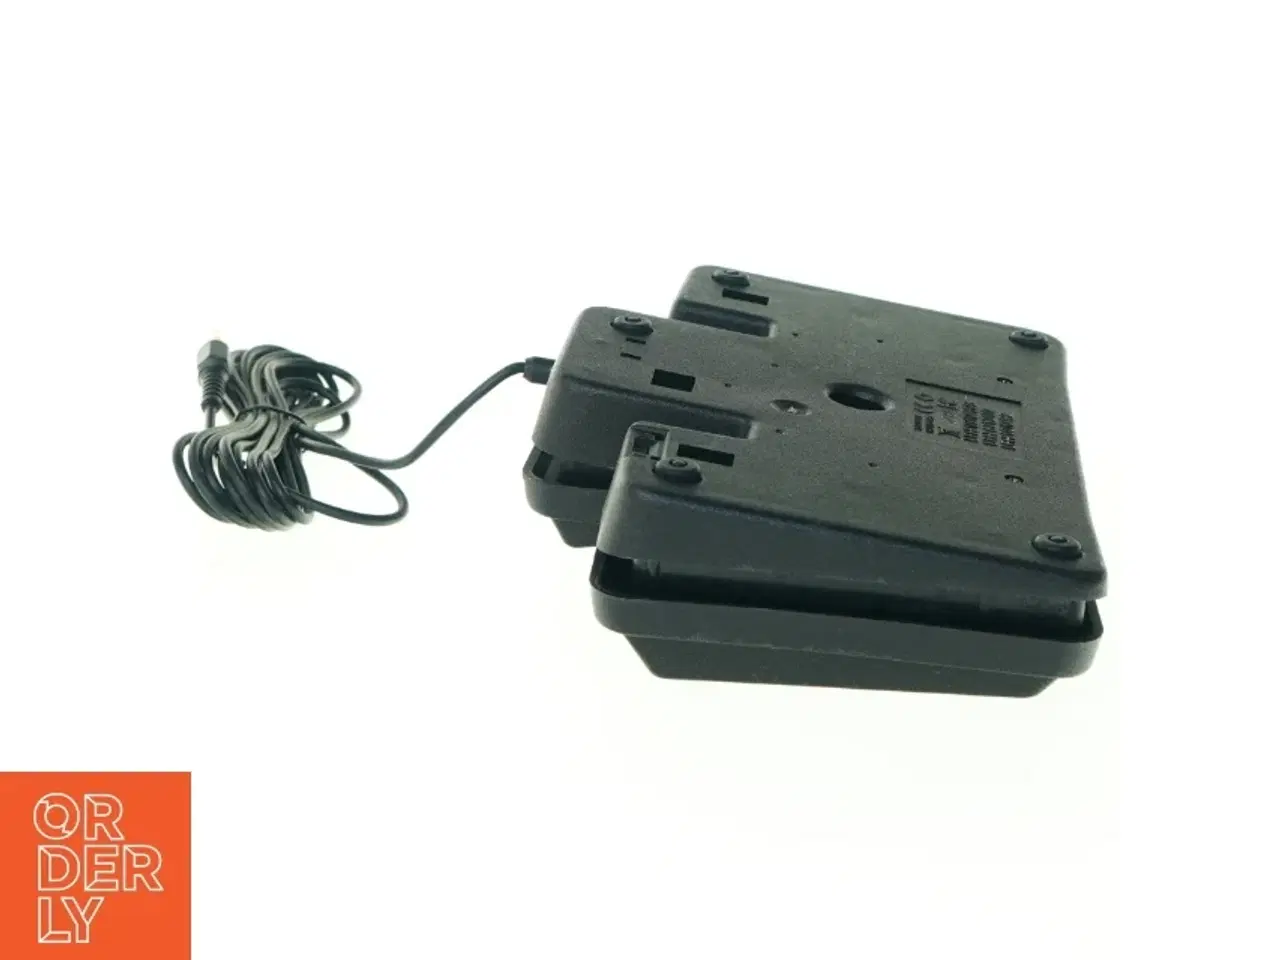 Billede 4 - Philips Transcriber 2-Way USB Foot Pedal Model:  LFH-0210/92 LFH-6212/00 LFH-0210/90B  (str. 19 x 11 cm)